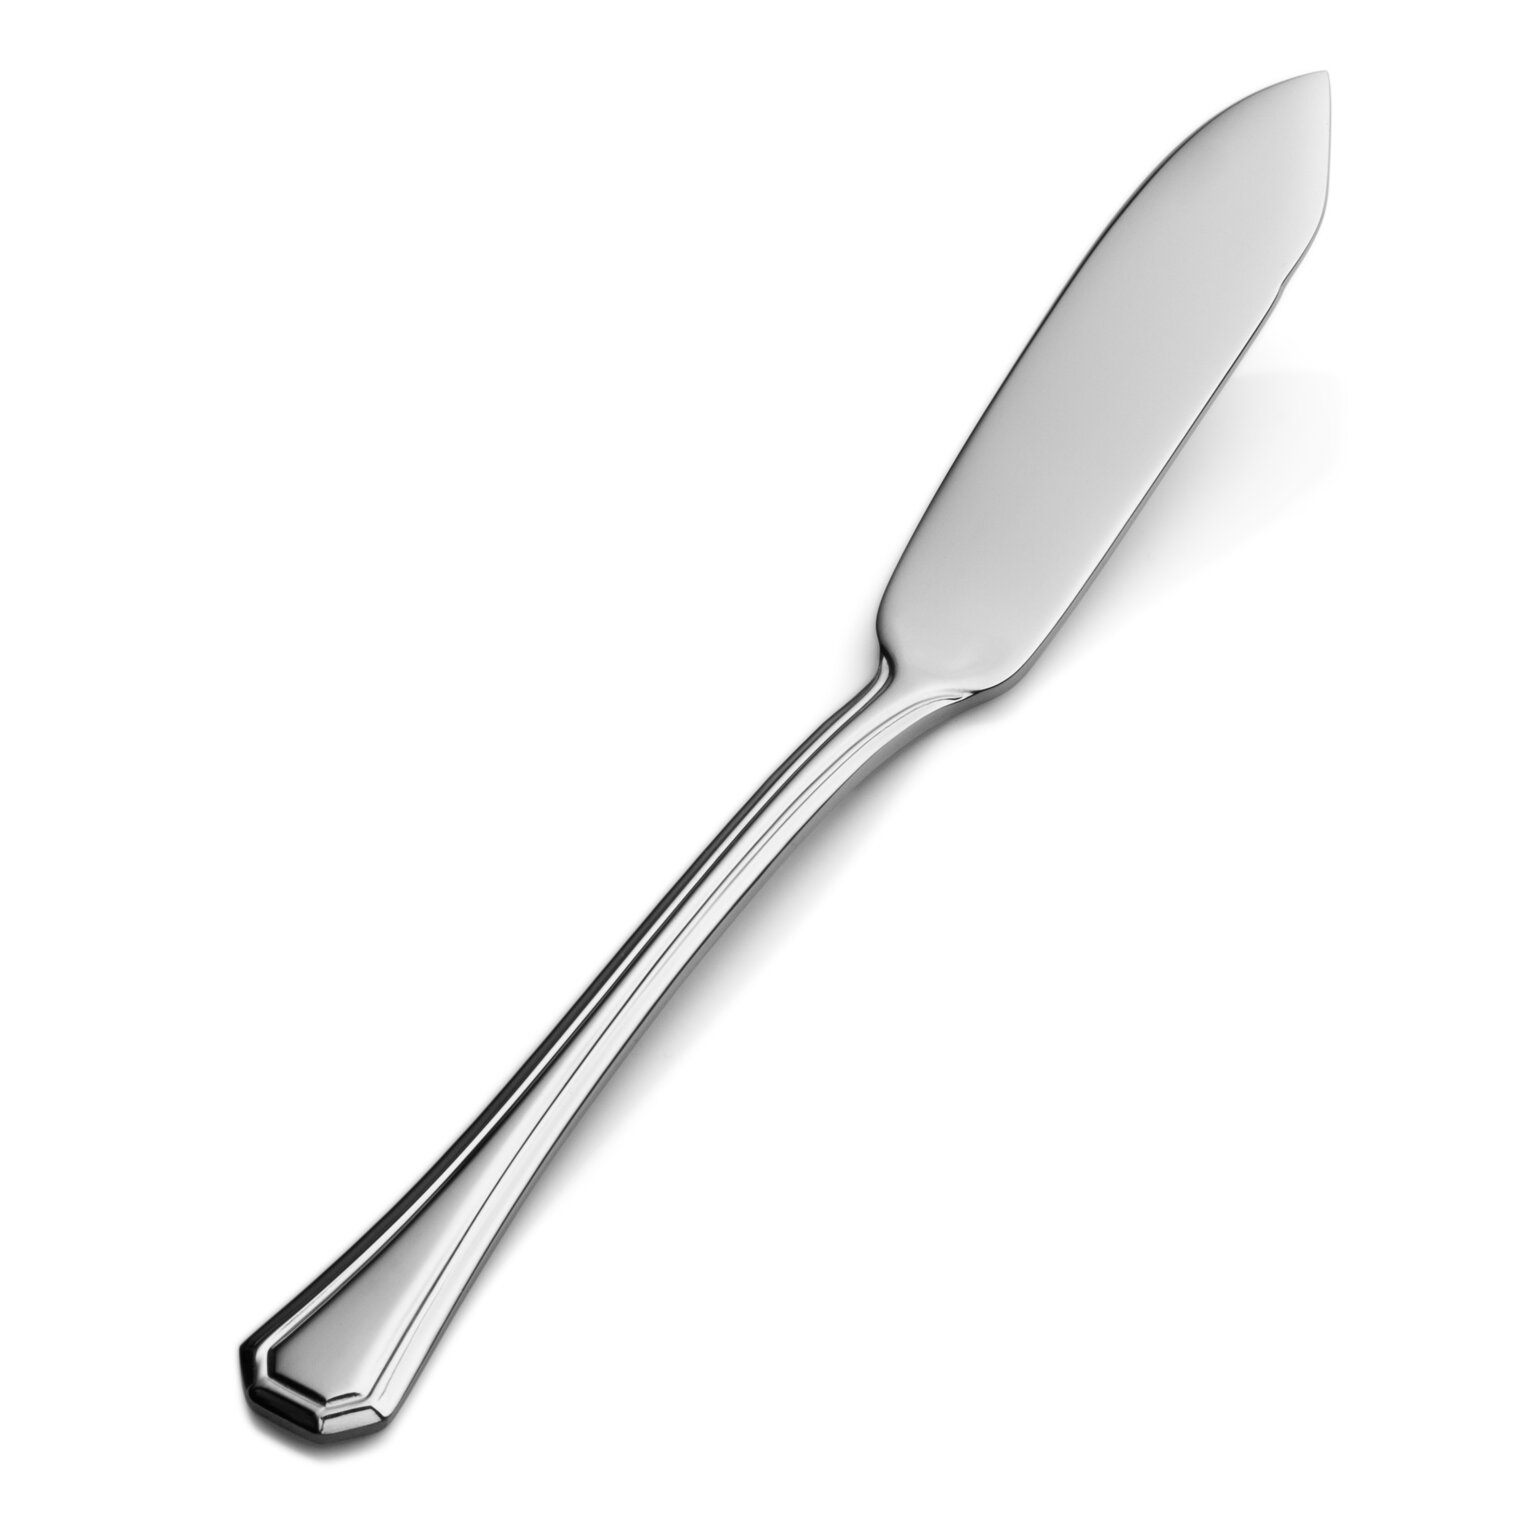 Bon Chef Prism Stainless Steel Butter Knife Wayfair